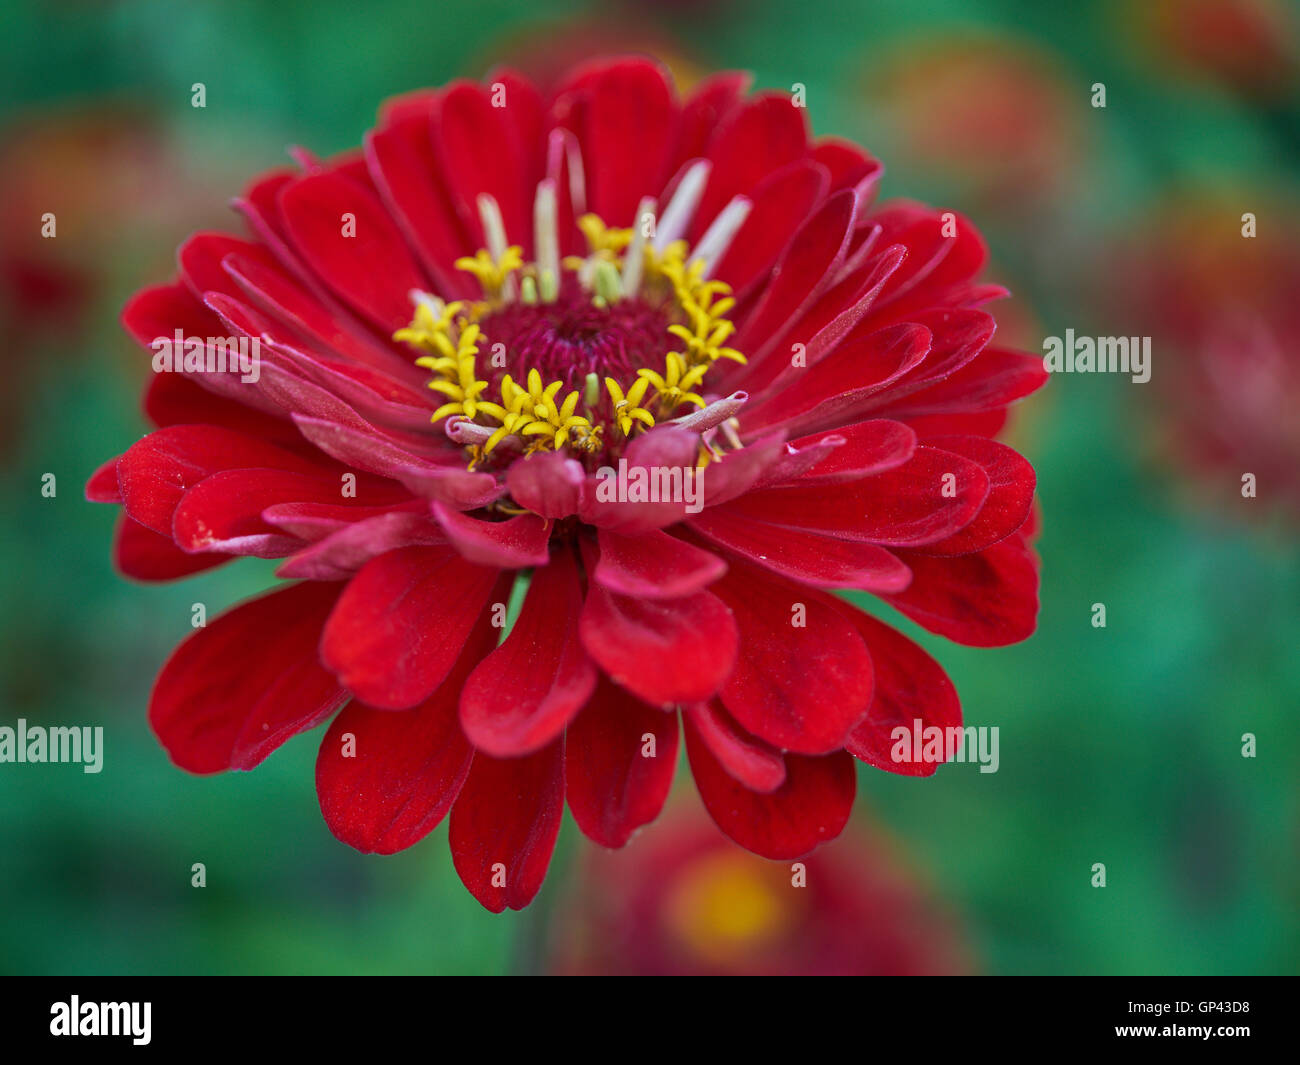 Red zinnia flower close up Stock Photo